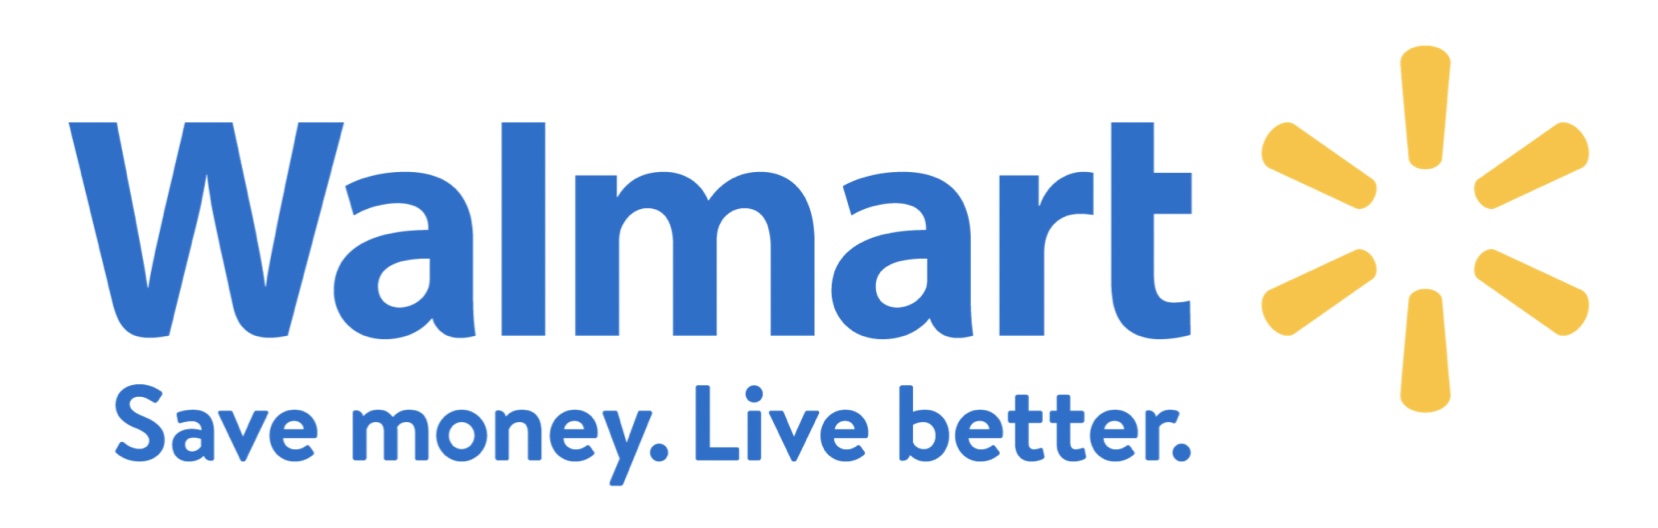 Transportation Company - Walmart - Consumer Products